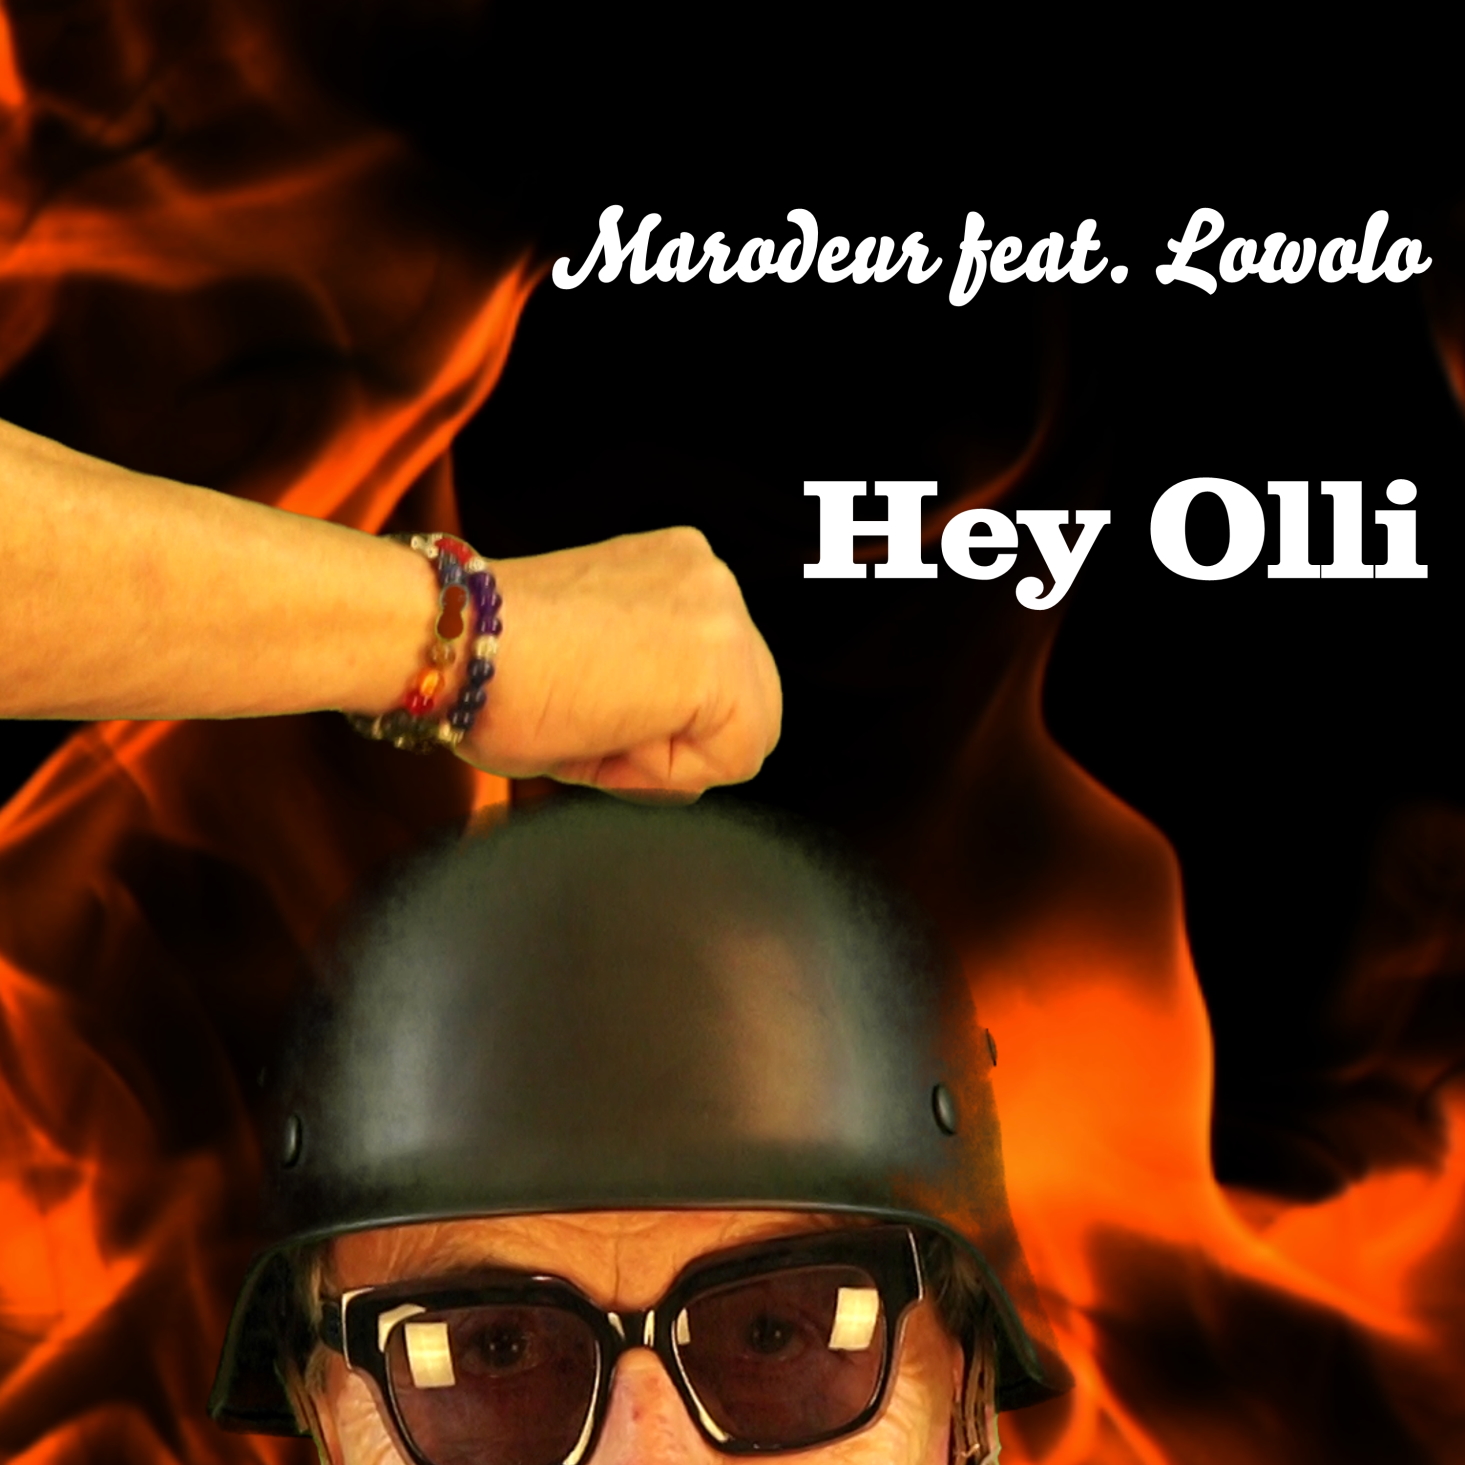 Marodeur feat Lowolo - Hey Olli Cover.jpg